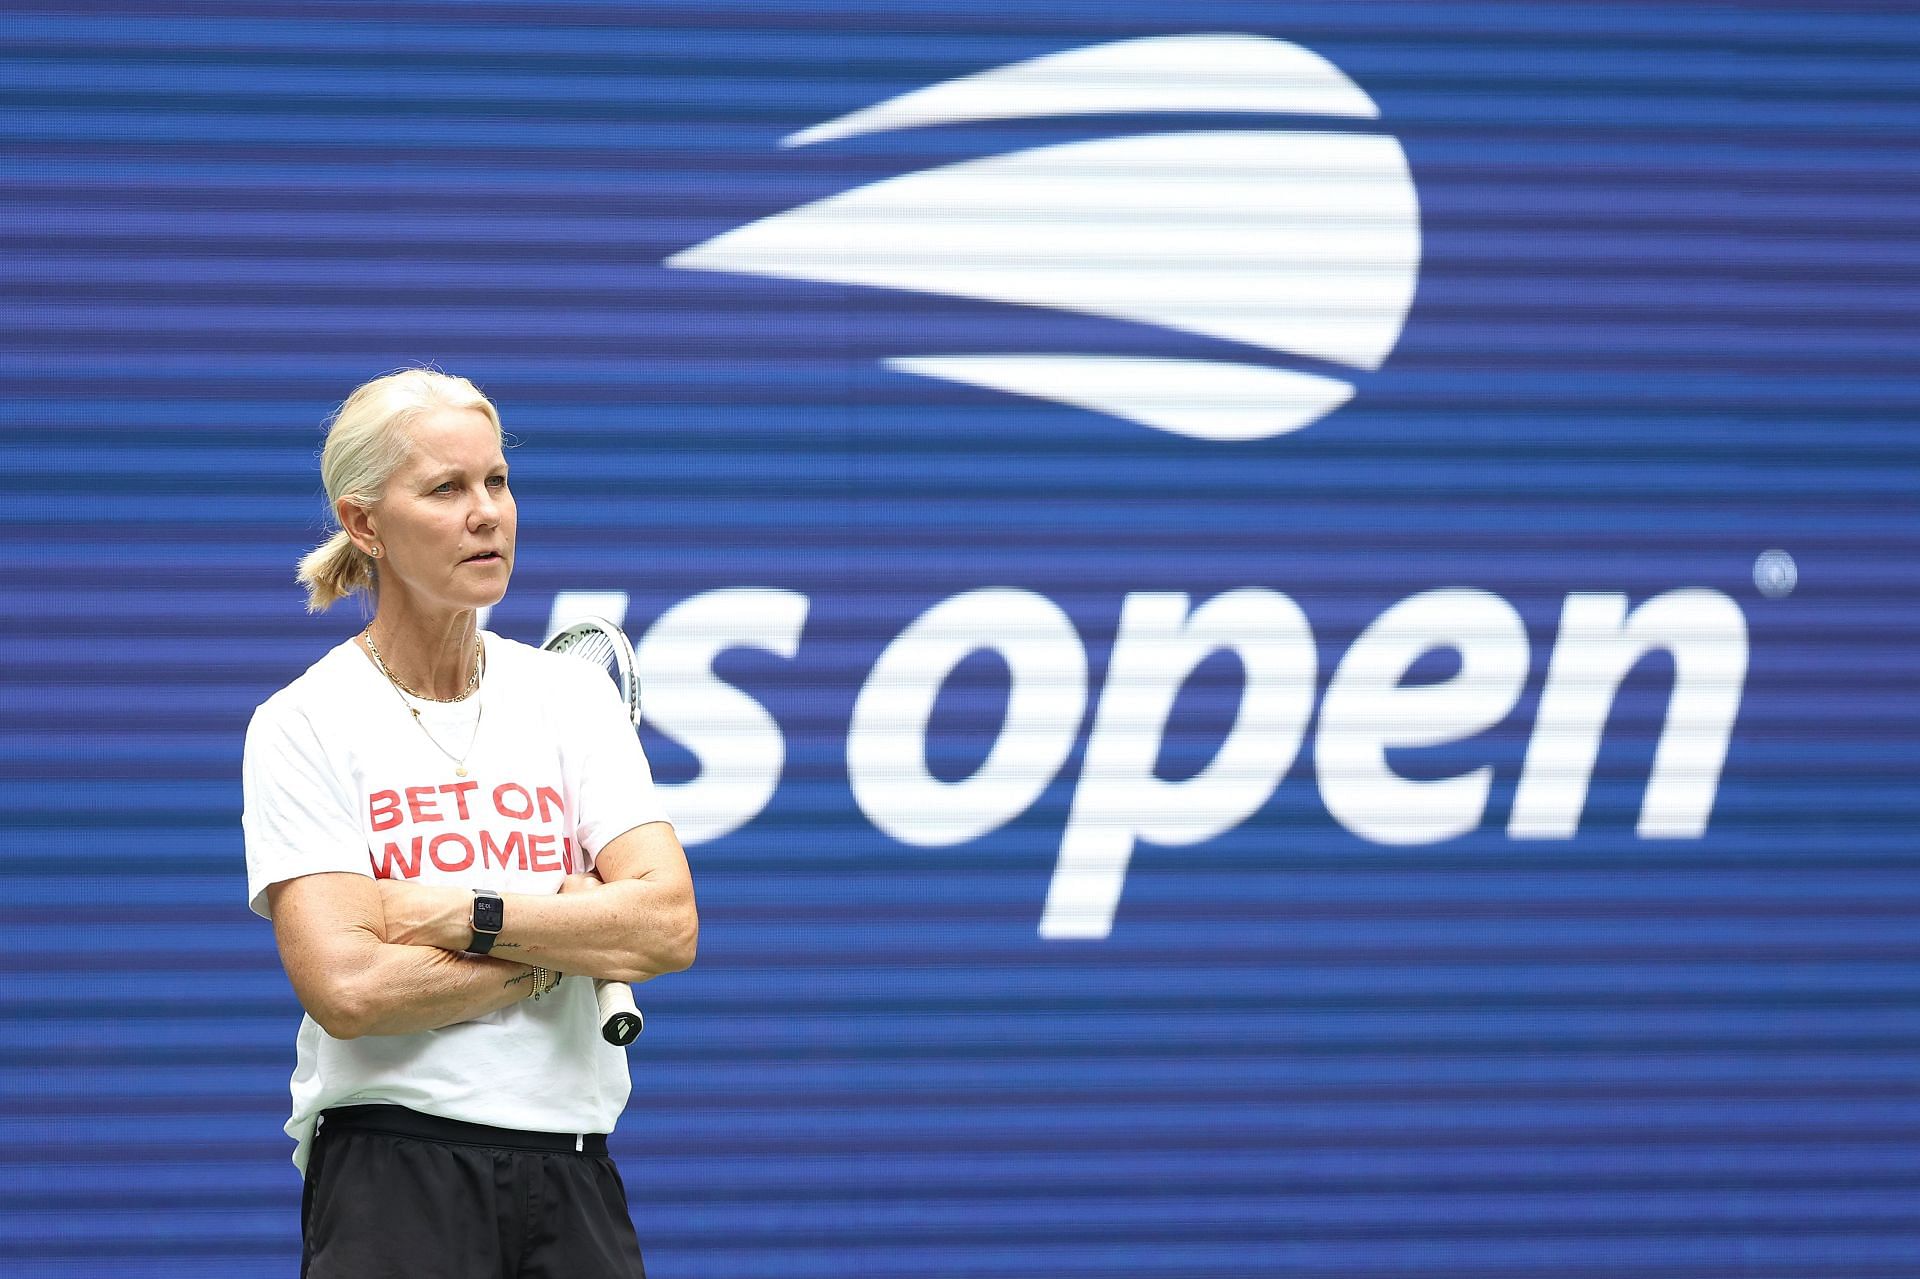 Rennae Stubbs coaching Serena Williams during the 2022 US Open